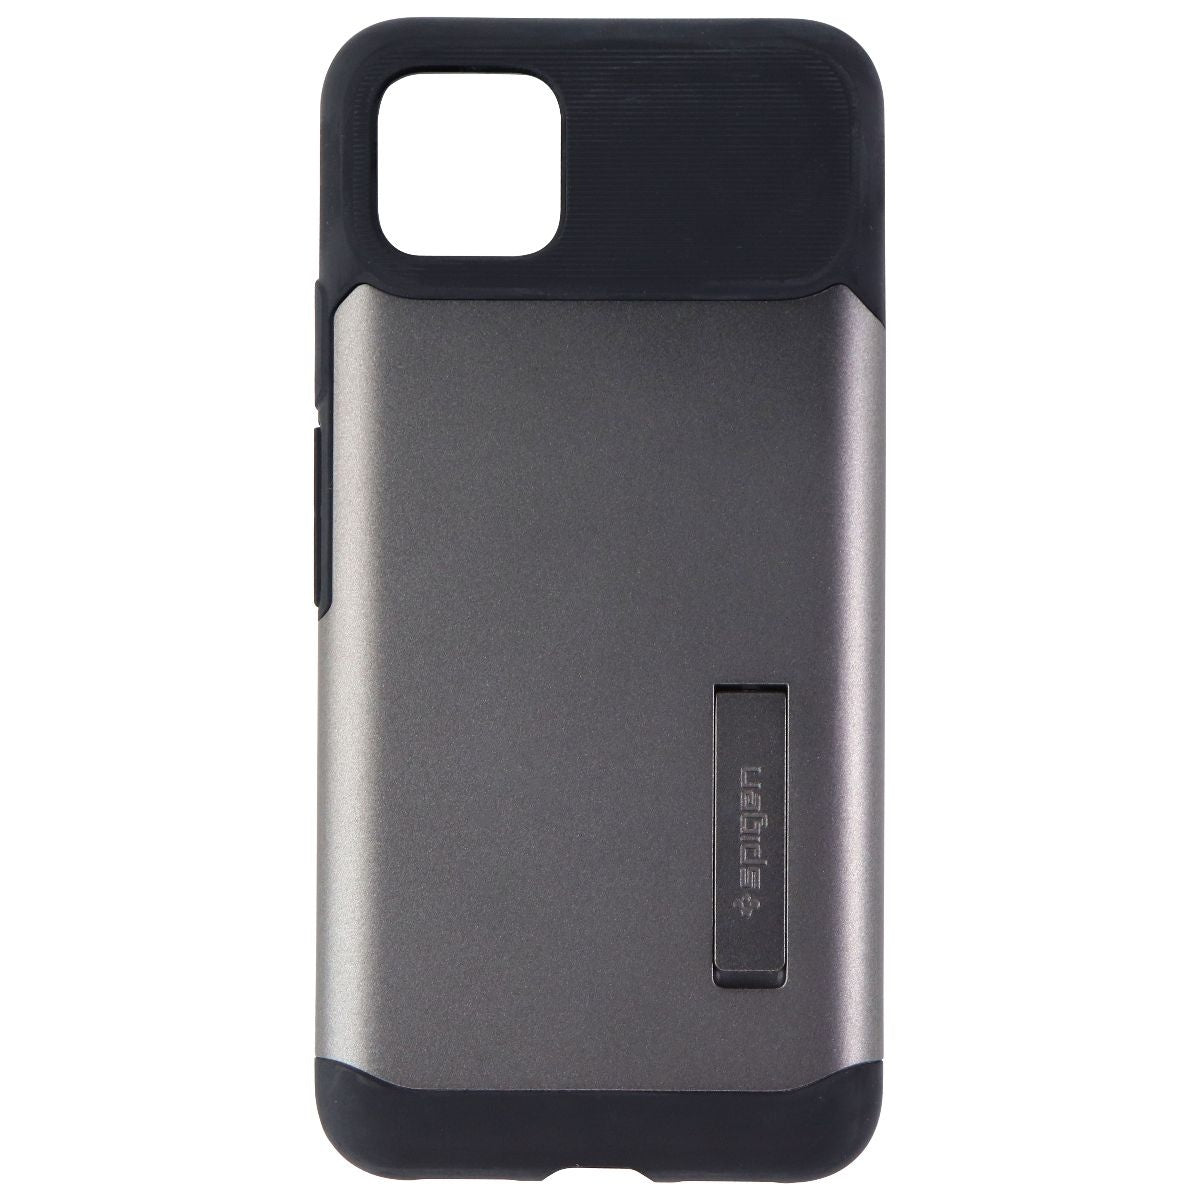 Spigen Slim Armor Case for Google Pixel 4 XL Case (2019) - Gunmetal/Black Cell Phone - Cases, Covers & Skins Spigen    - Simple Cell Bulk Wholesale Pricing - USA Seller